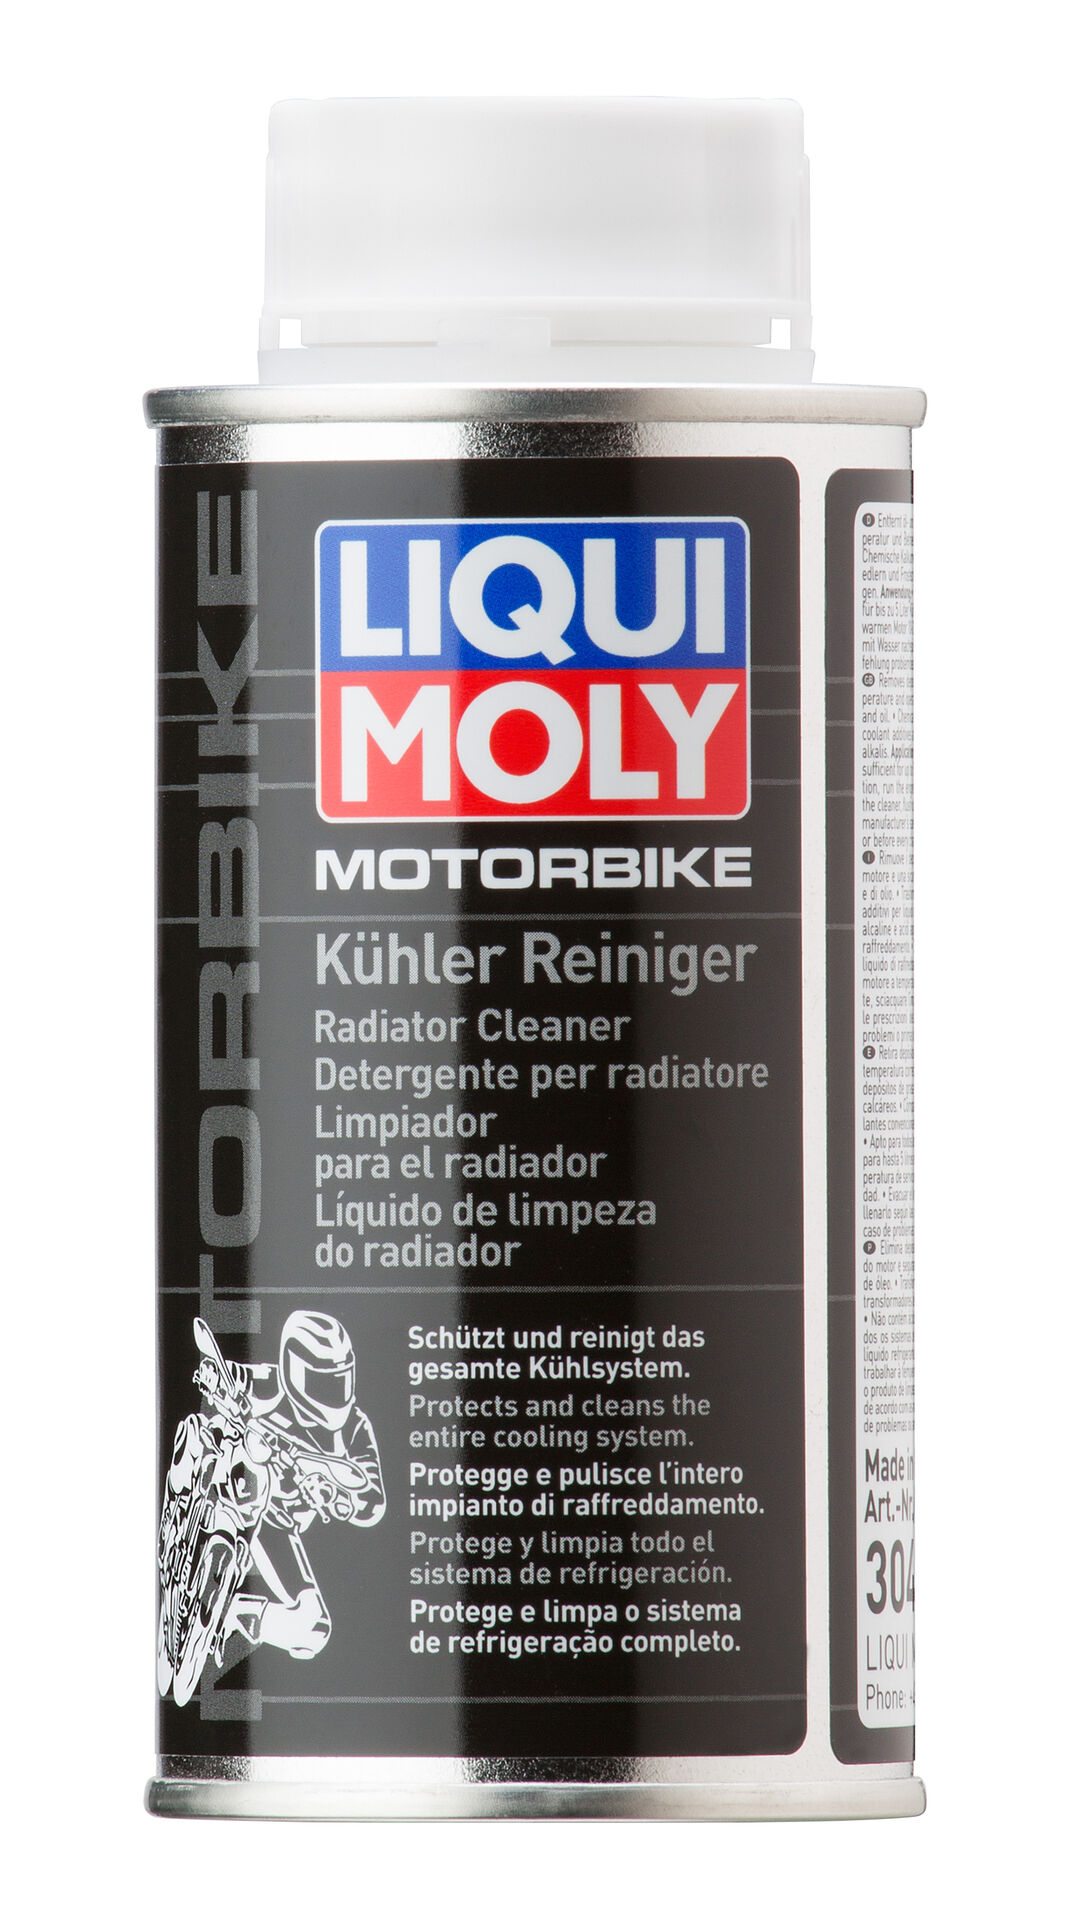 LIQUI MOLY Motorbike Kühler-Reiniger Radiator Cleaner Flush Dose 150 ml